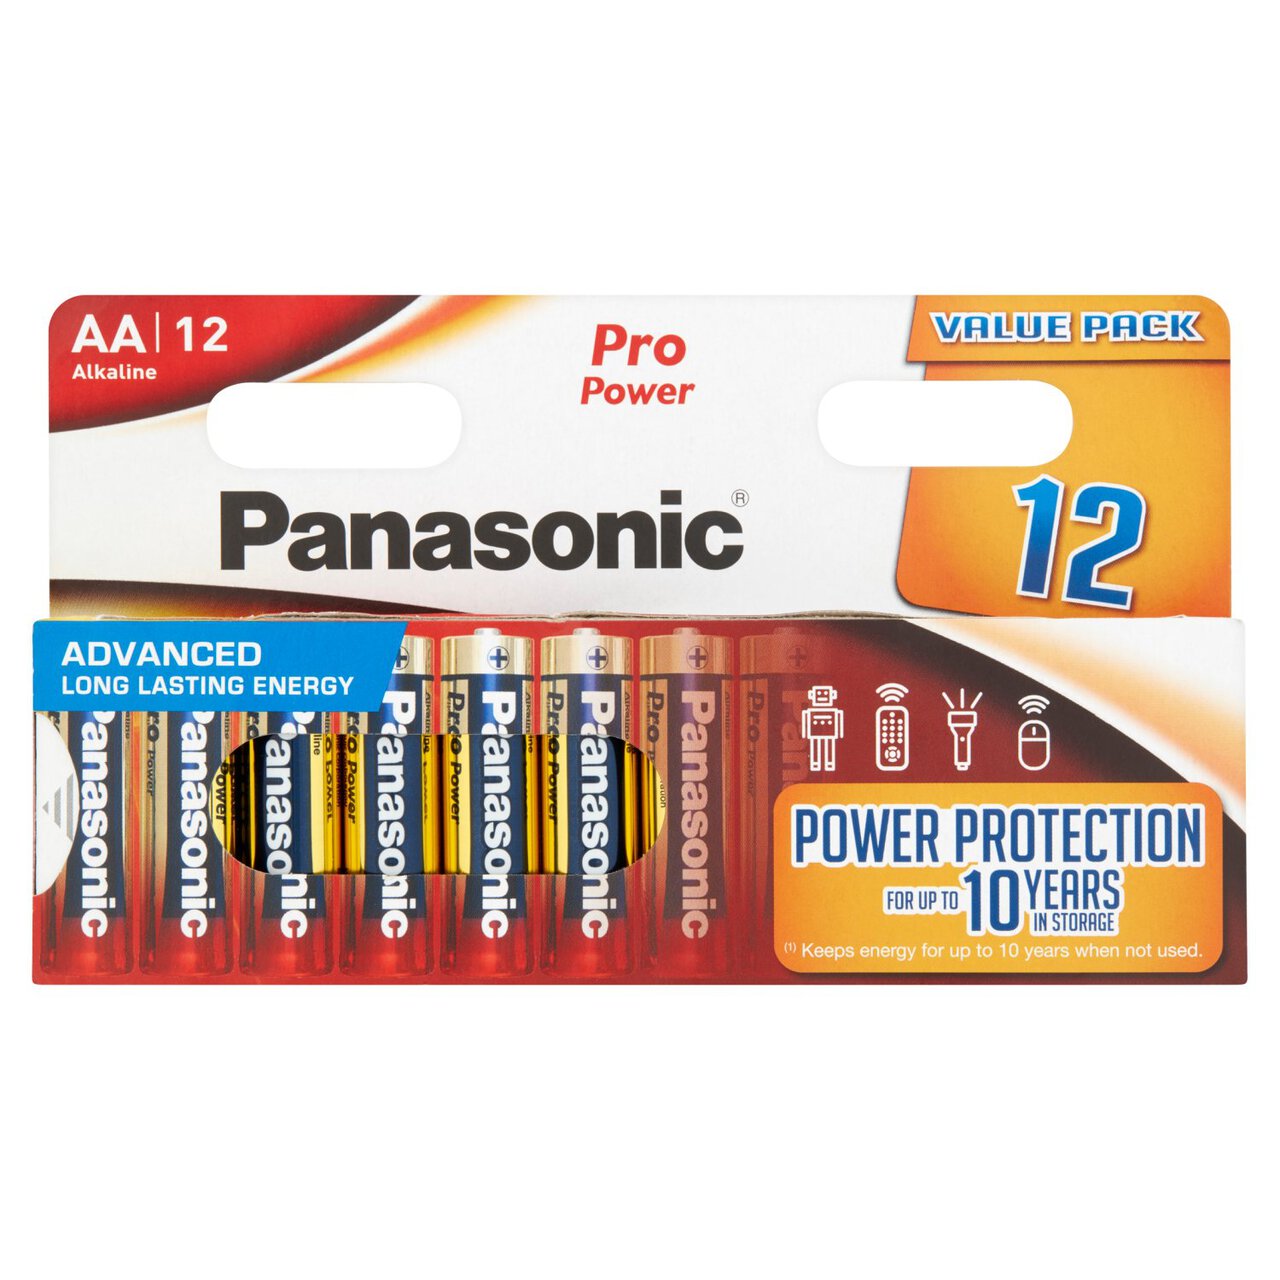 Panasonic Pro Power AA Batteries Alkaline 12 per pack